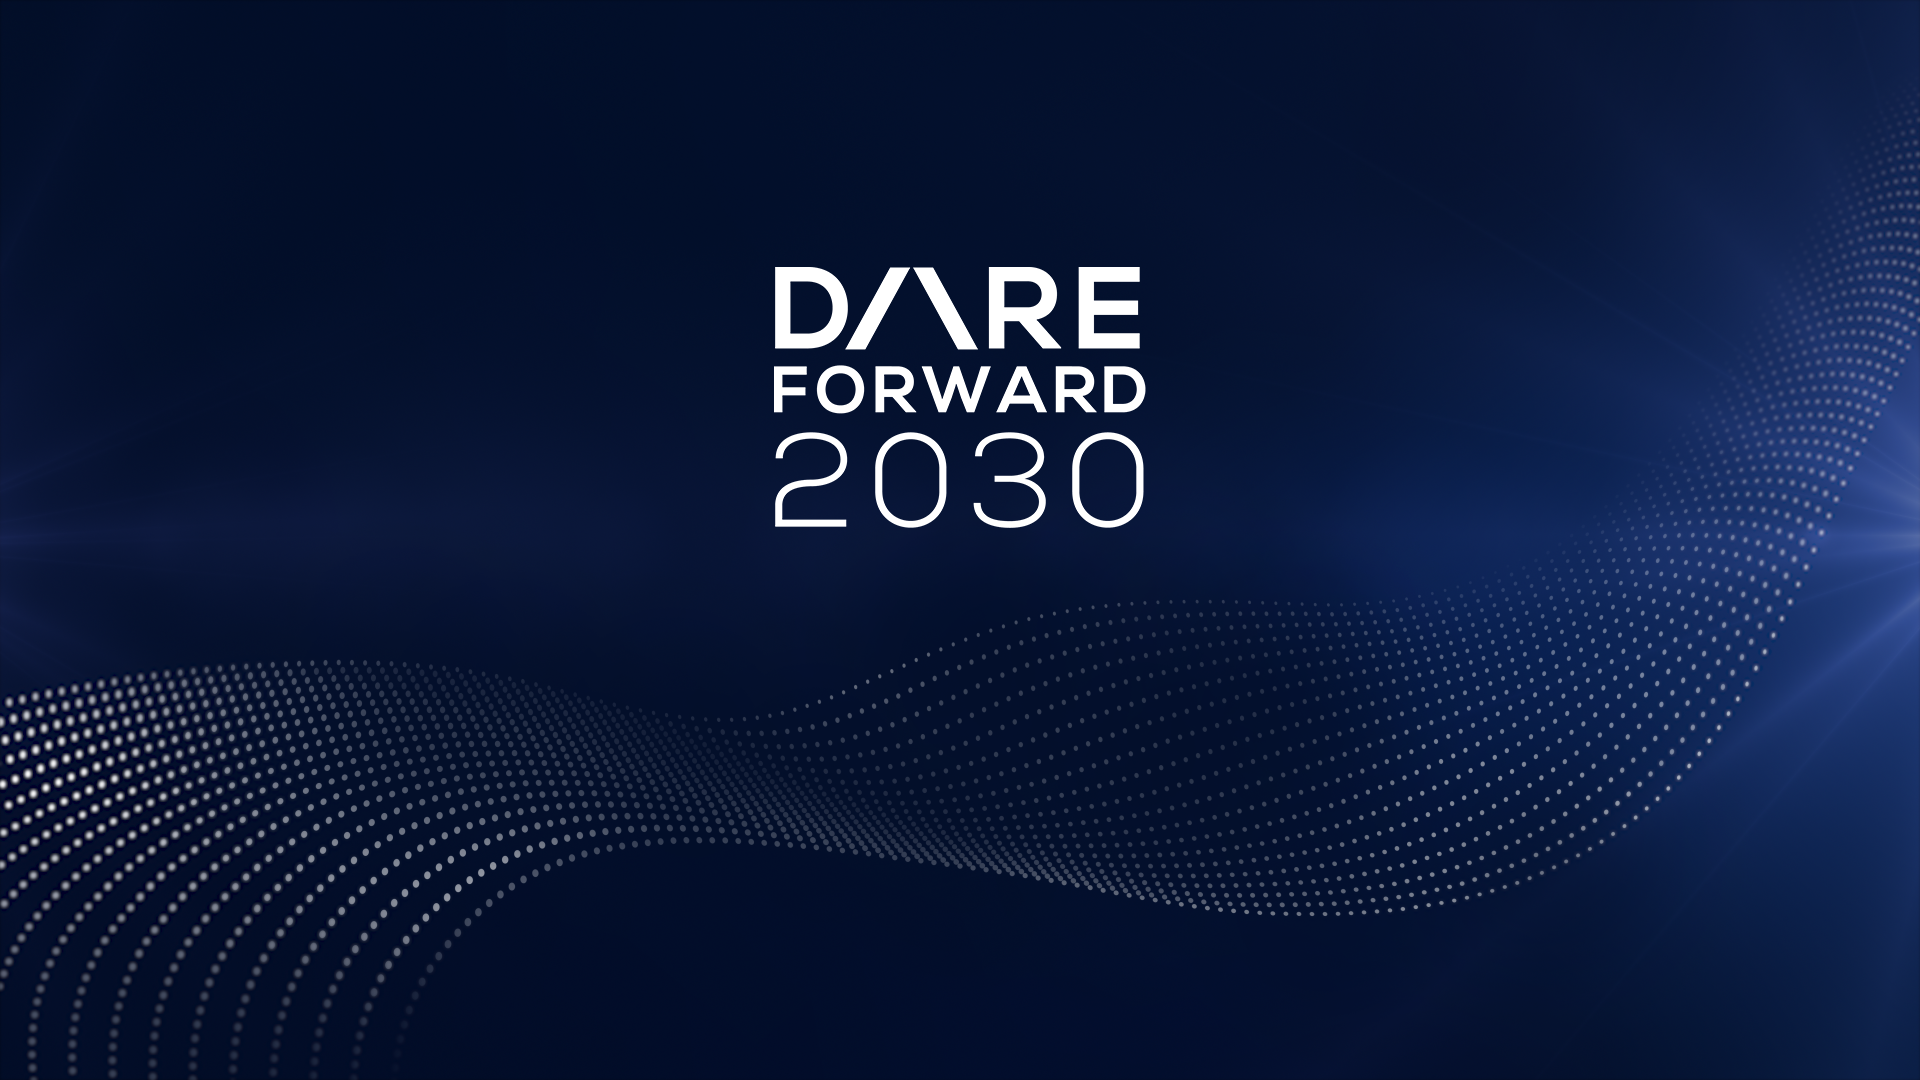 image of dare forward 2030